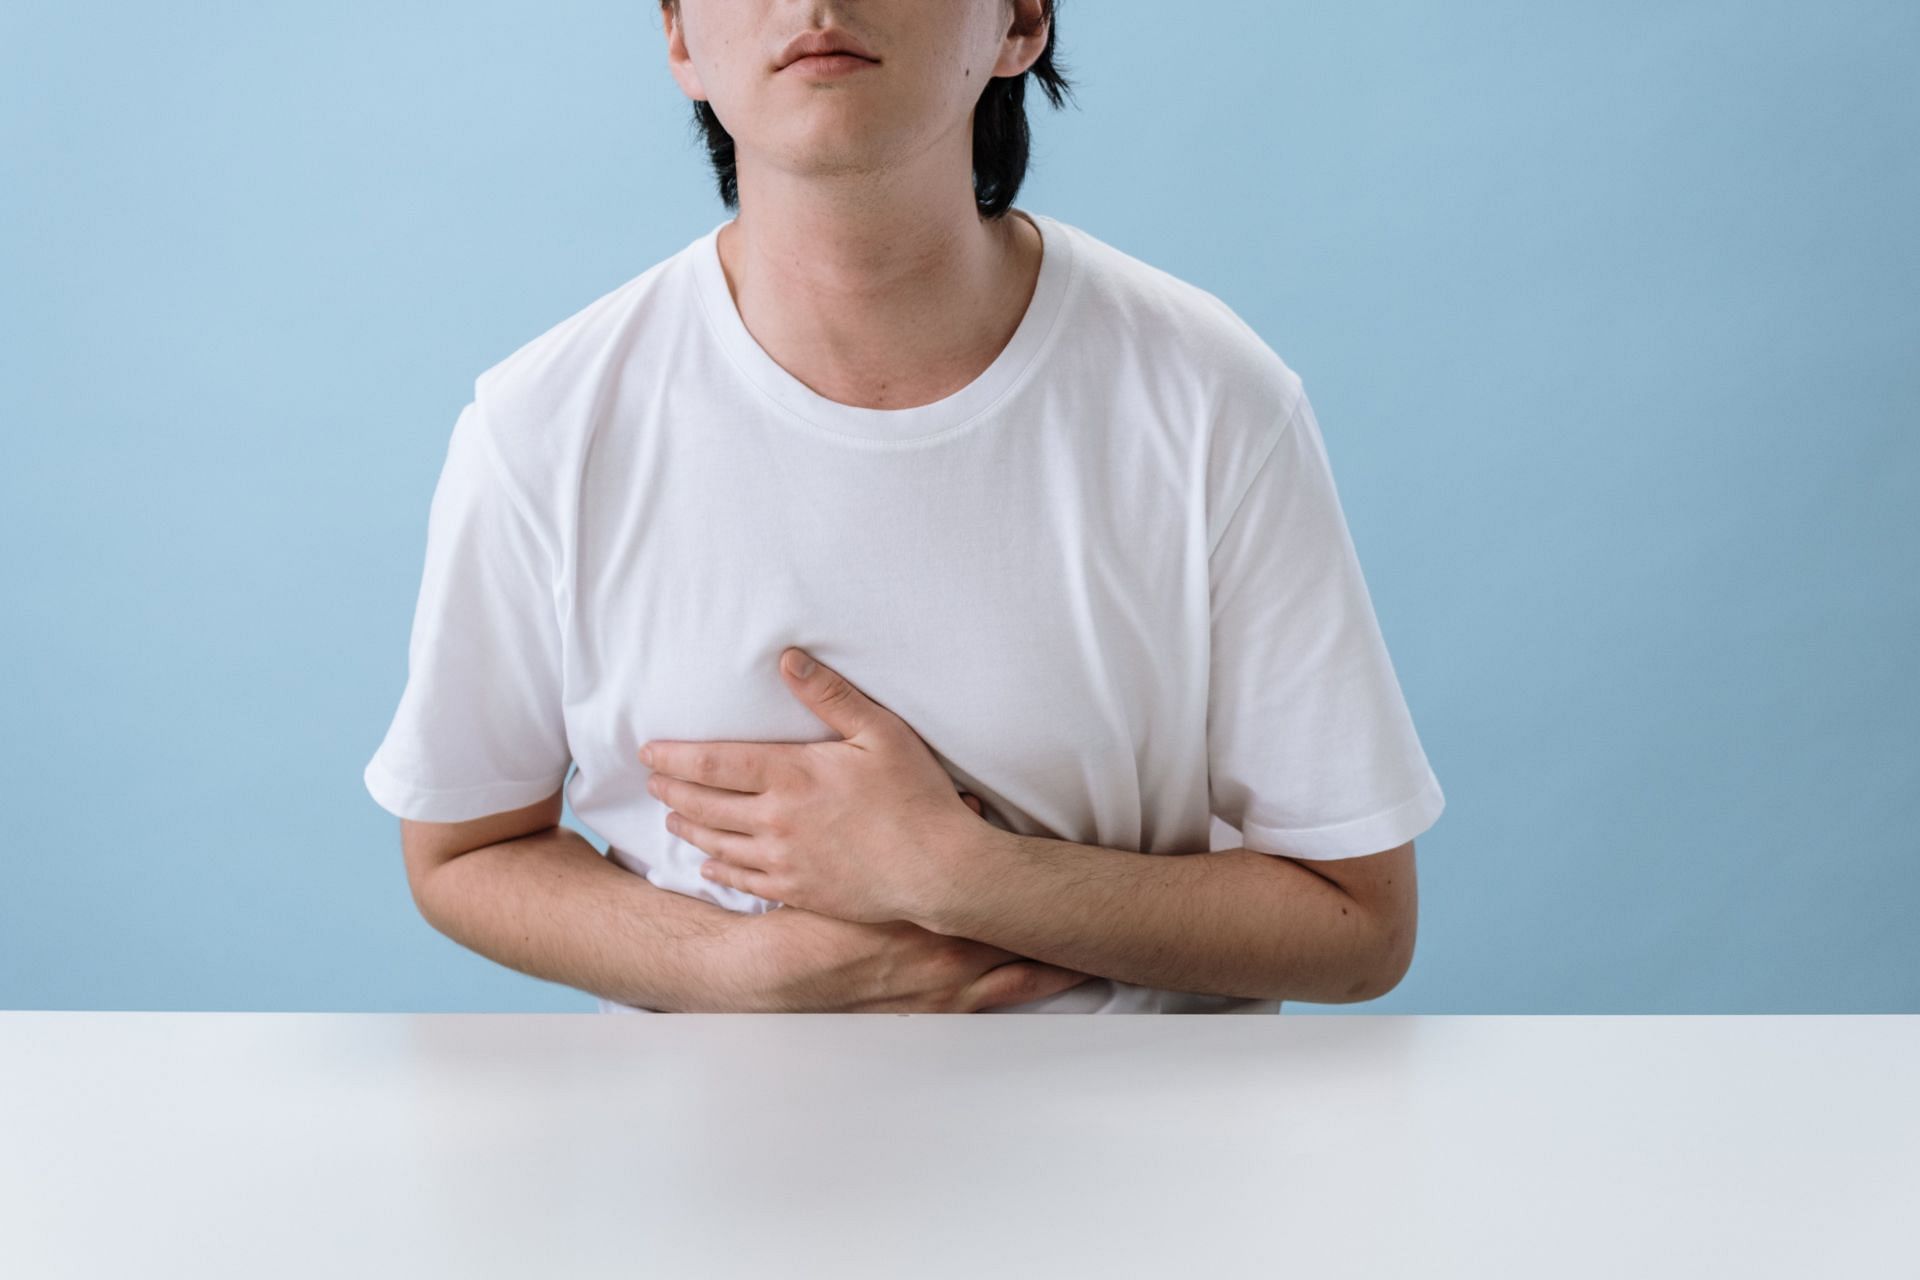 Irritable bowel syndrome can cause severe abdominal pain. (Image via Pexels / Cottonbro Studio)